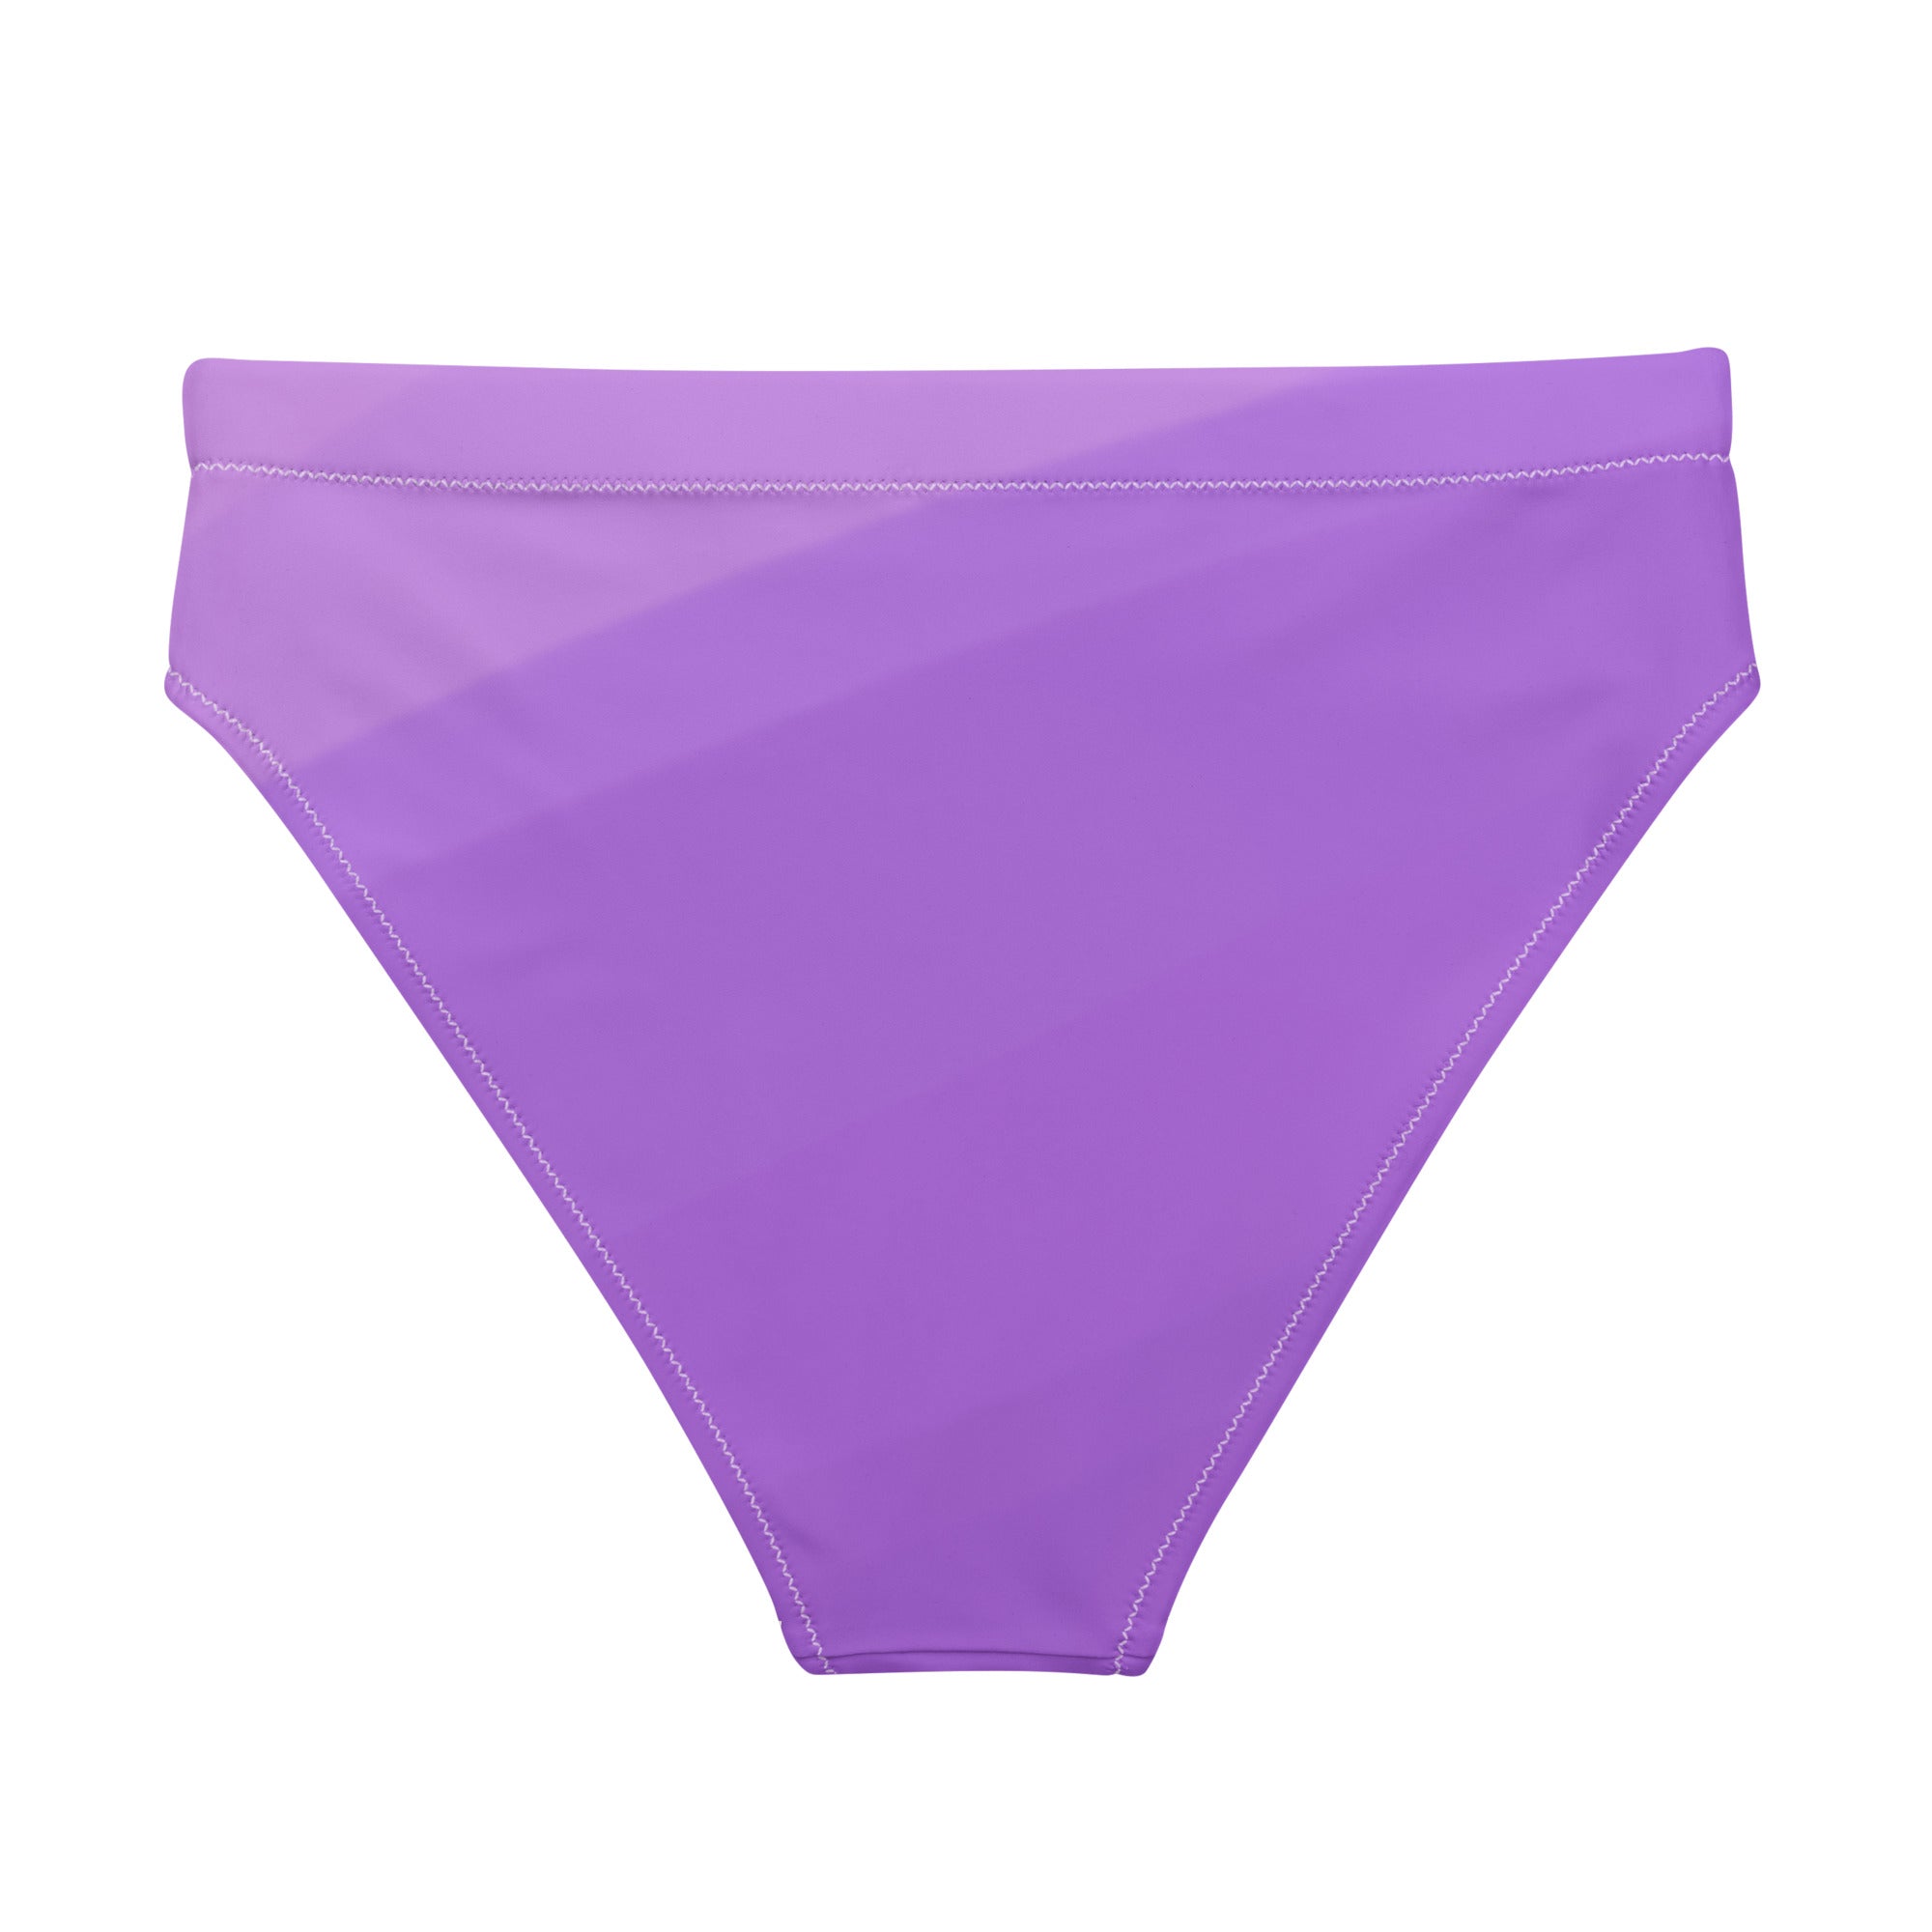 Purple bikini bottoms women's swimwear